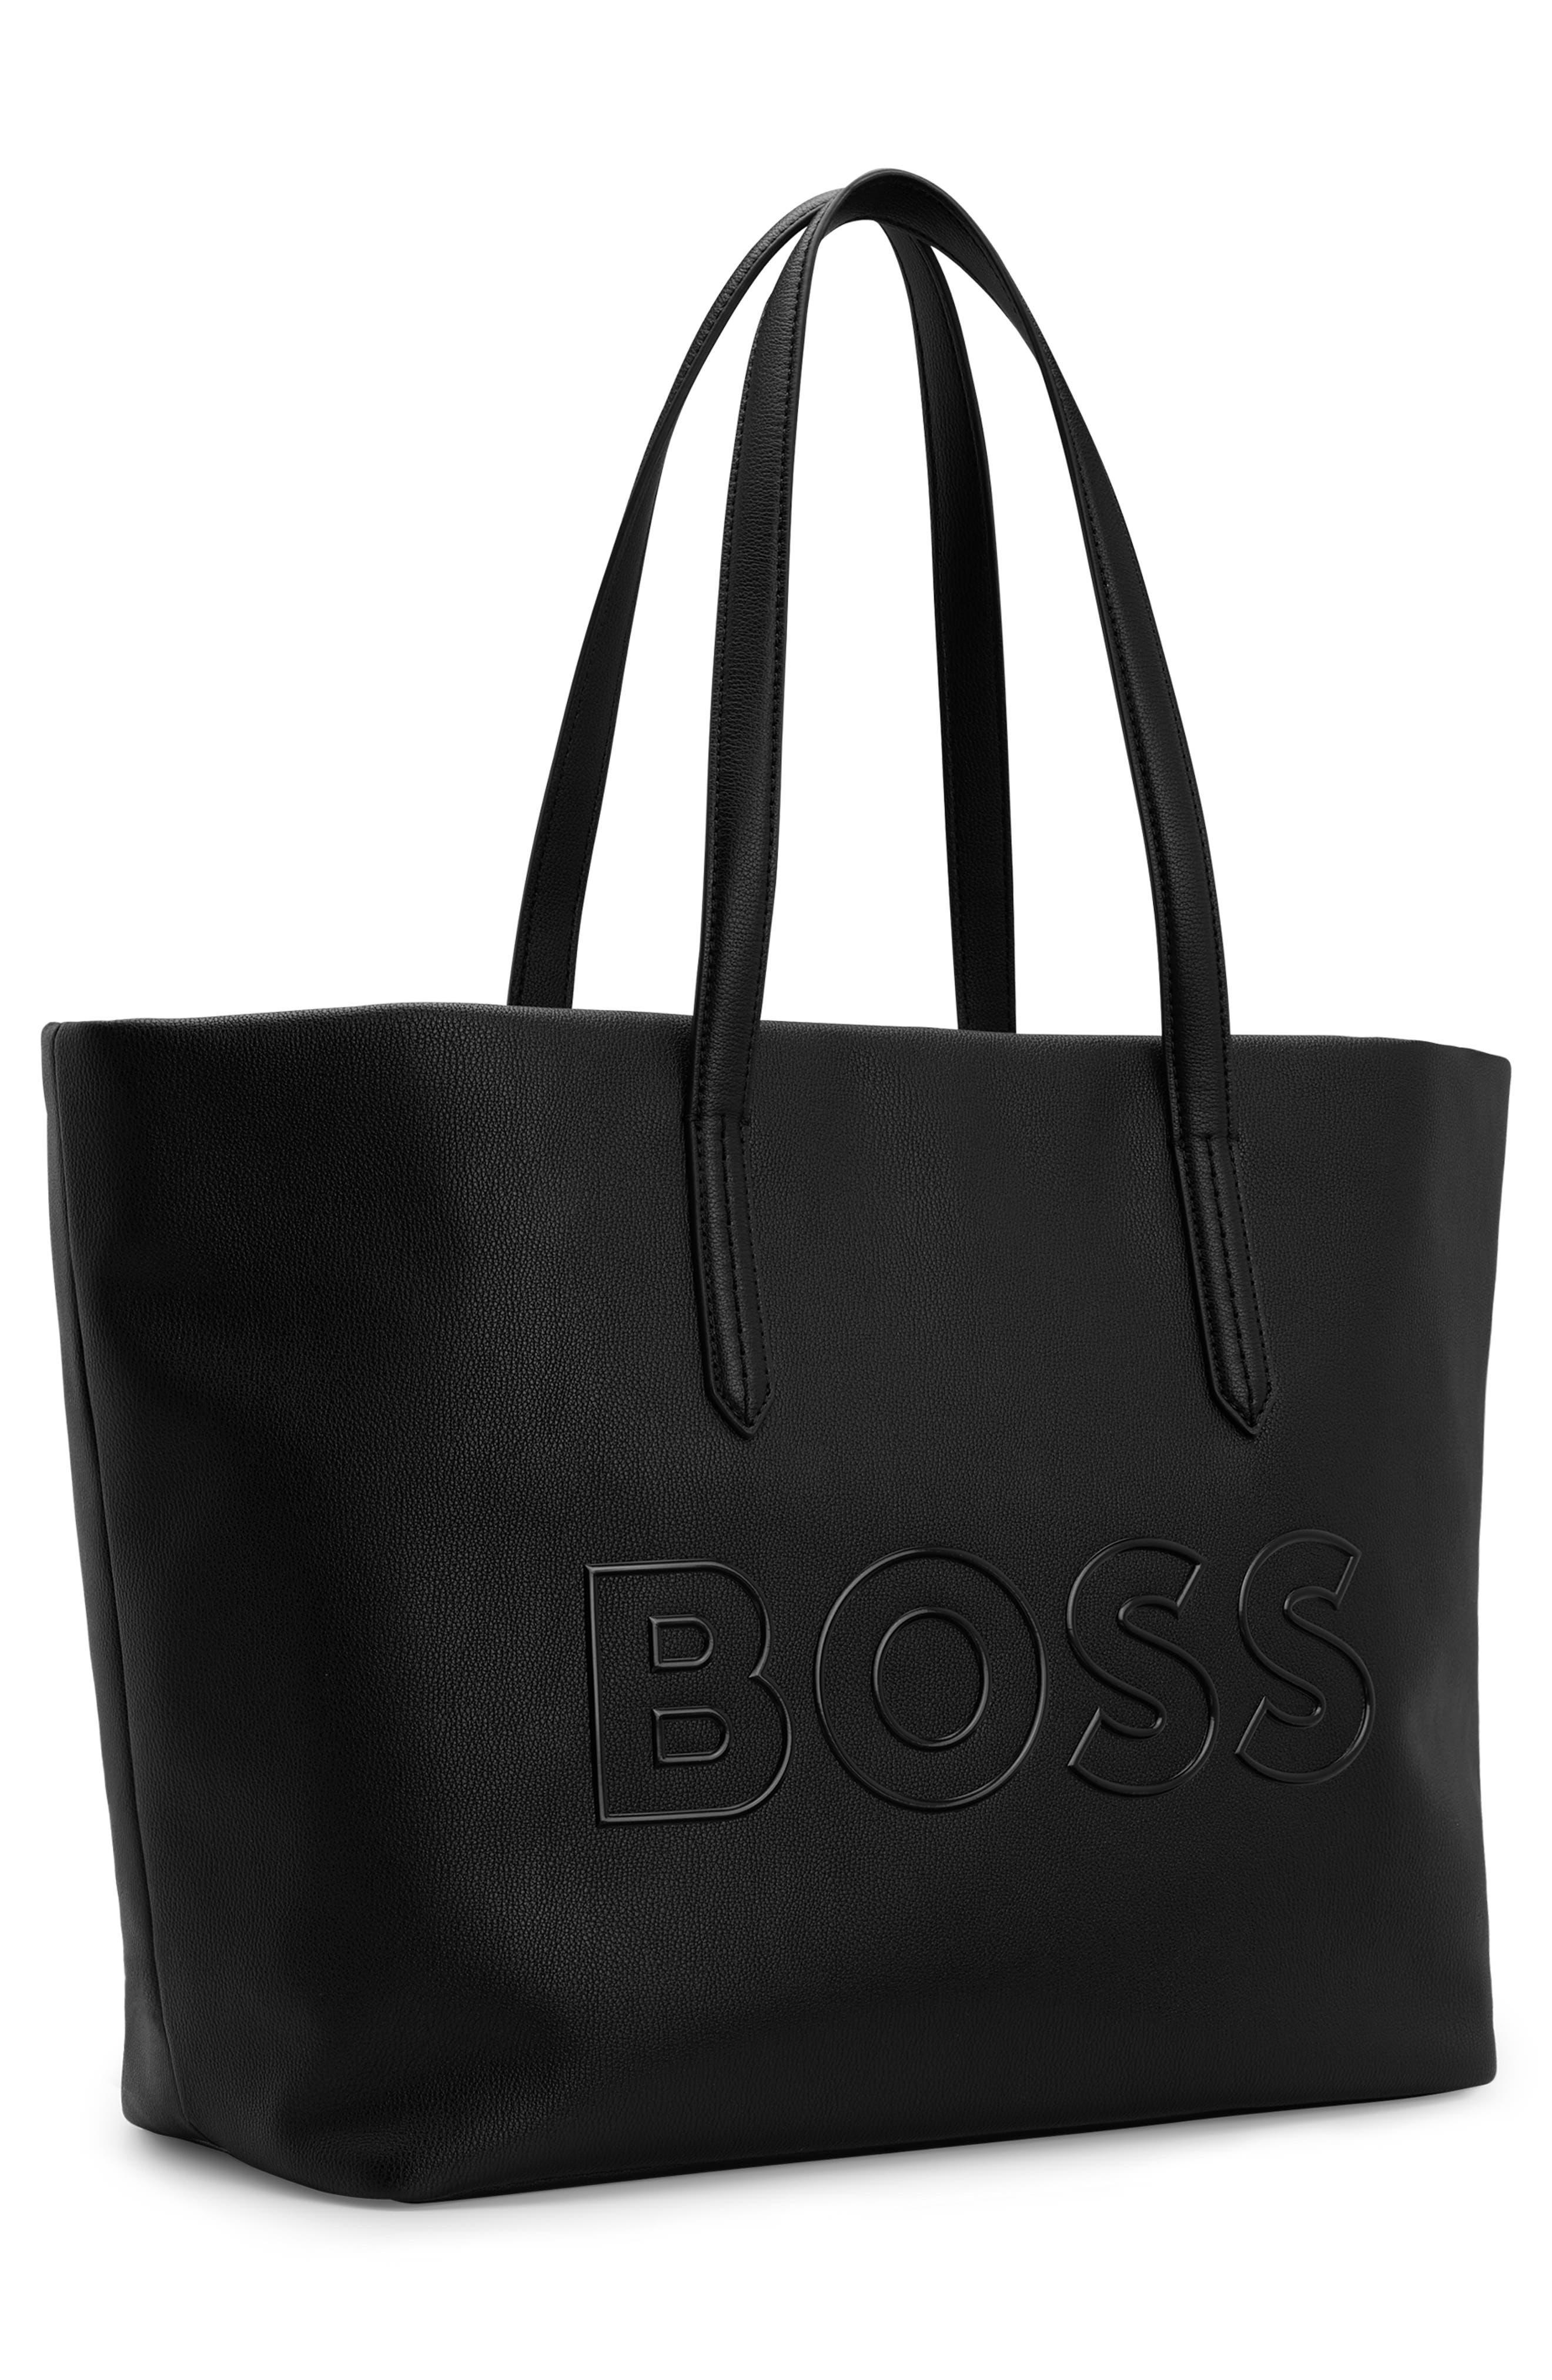 BOSS by HUGO BOSS Large Addison Shopper Tote in Black | Lyst